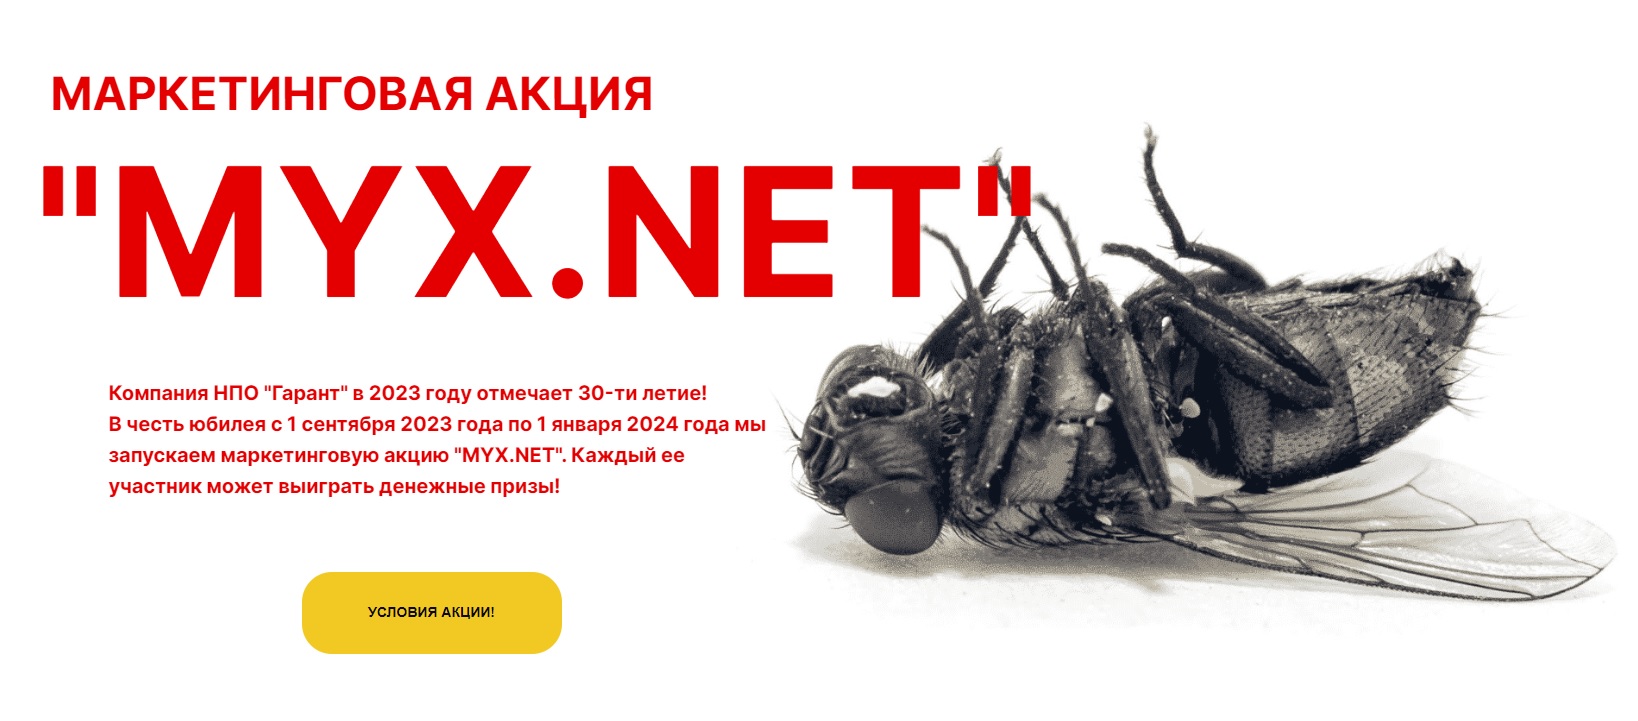 Промо-акция НПО Гарант: «MYX.NET»